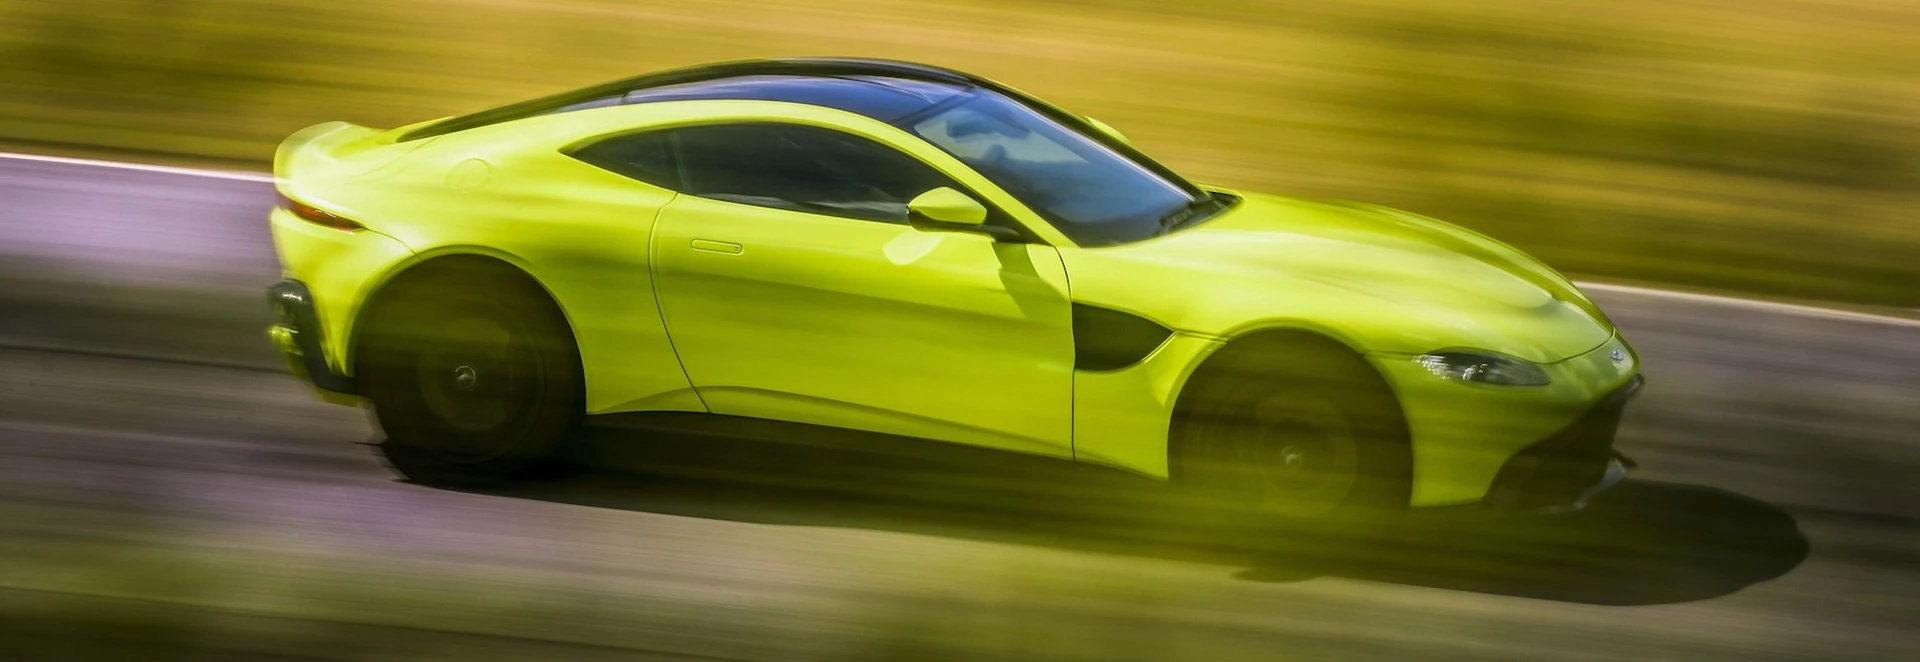 Aston Martin begins production of Vantage sports car